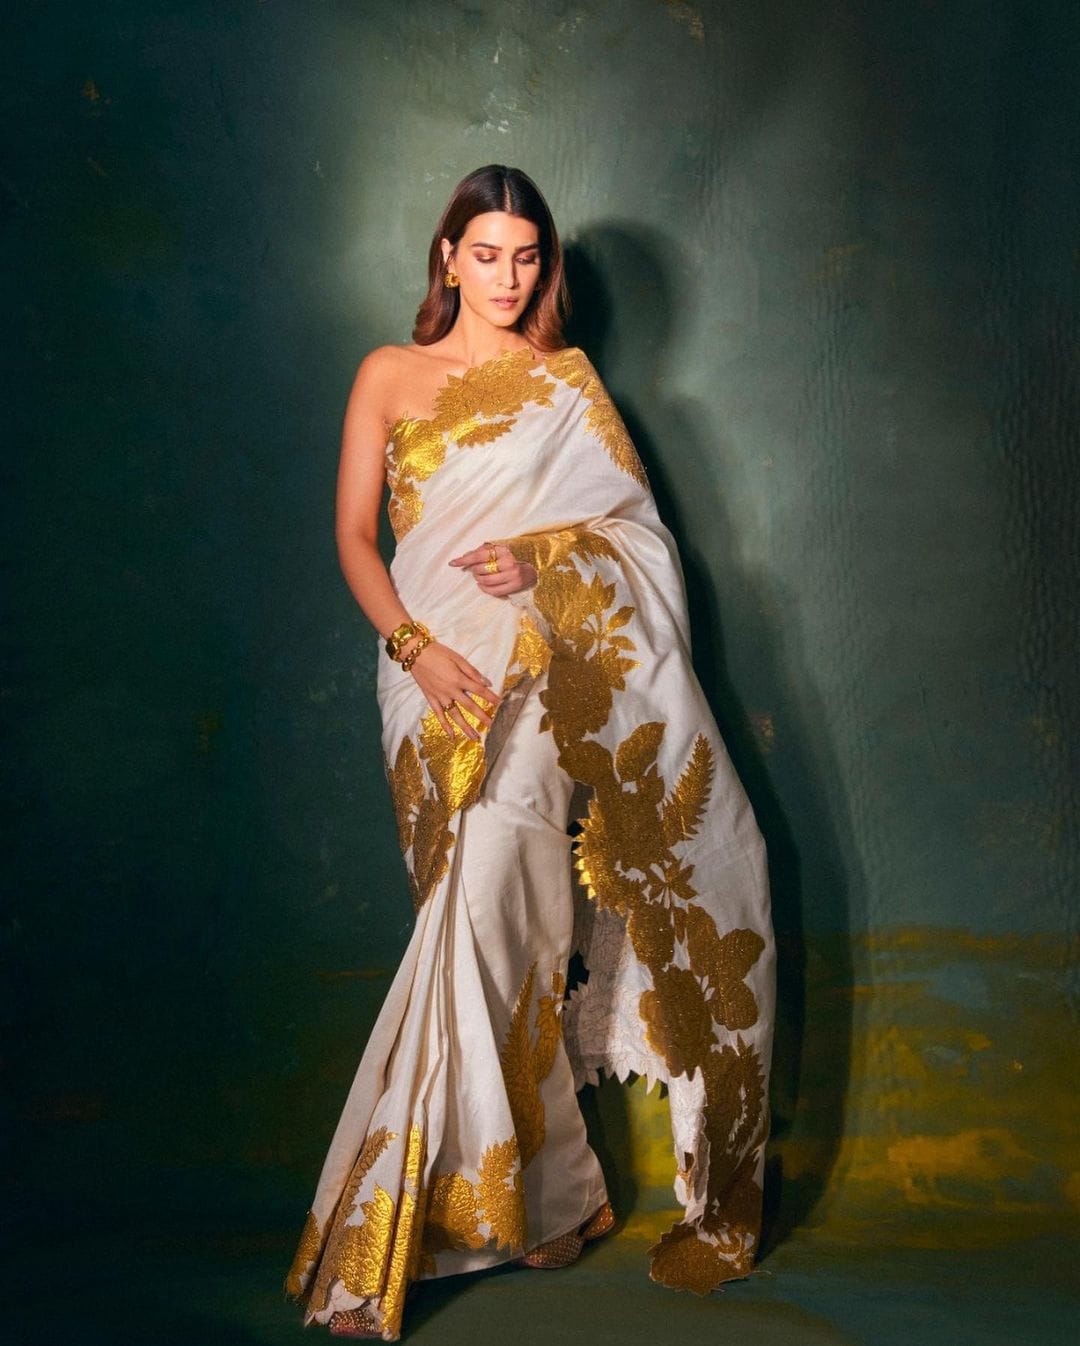 Kriti Sanon looks regal in the white and golden saree